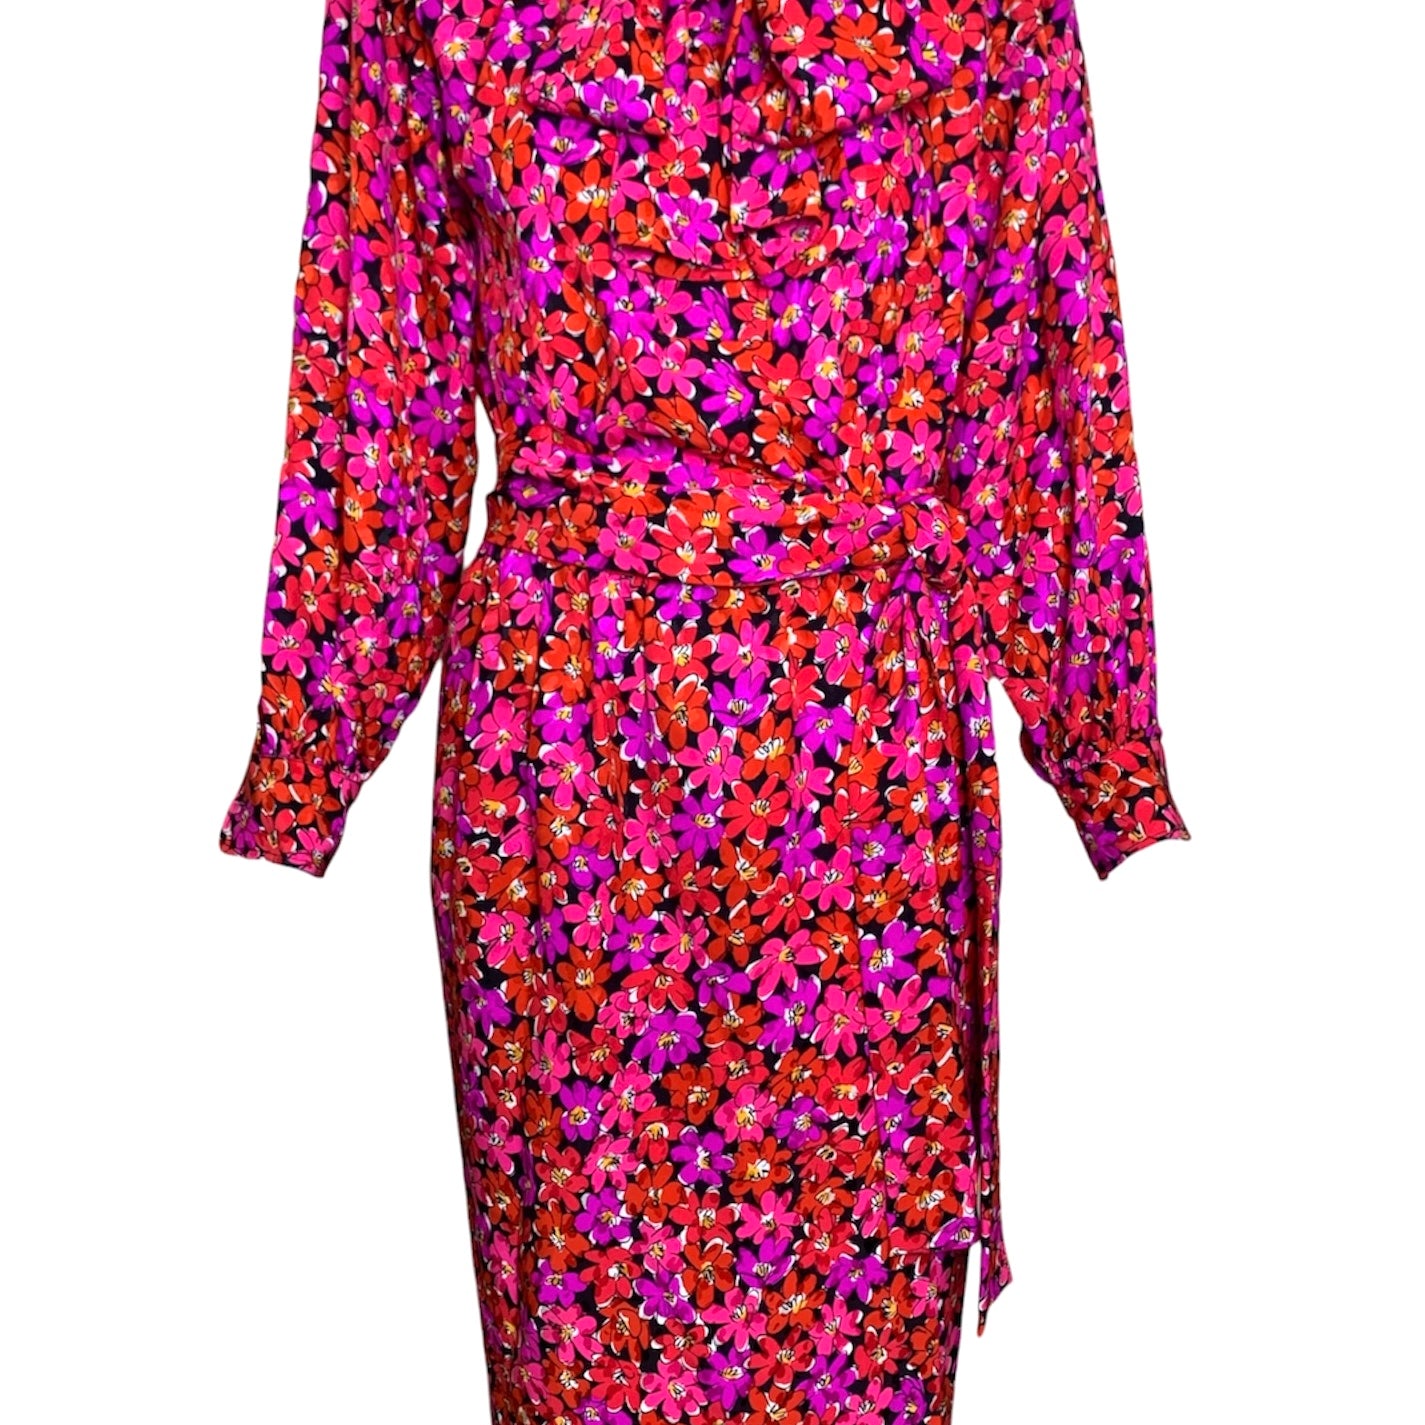 1989 Saint Laurent Magenta Silk Floral Print Dress Ensemble FULL ENSEMBLE FRONT